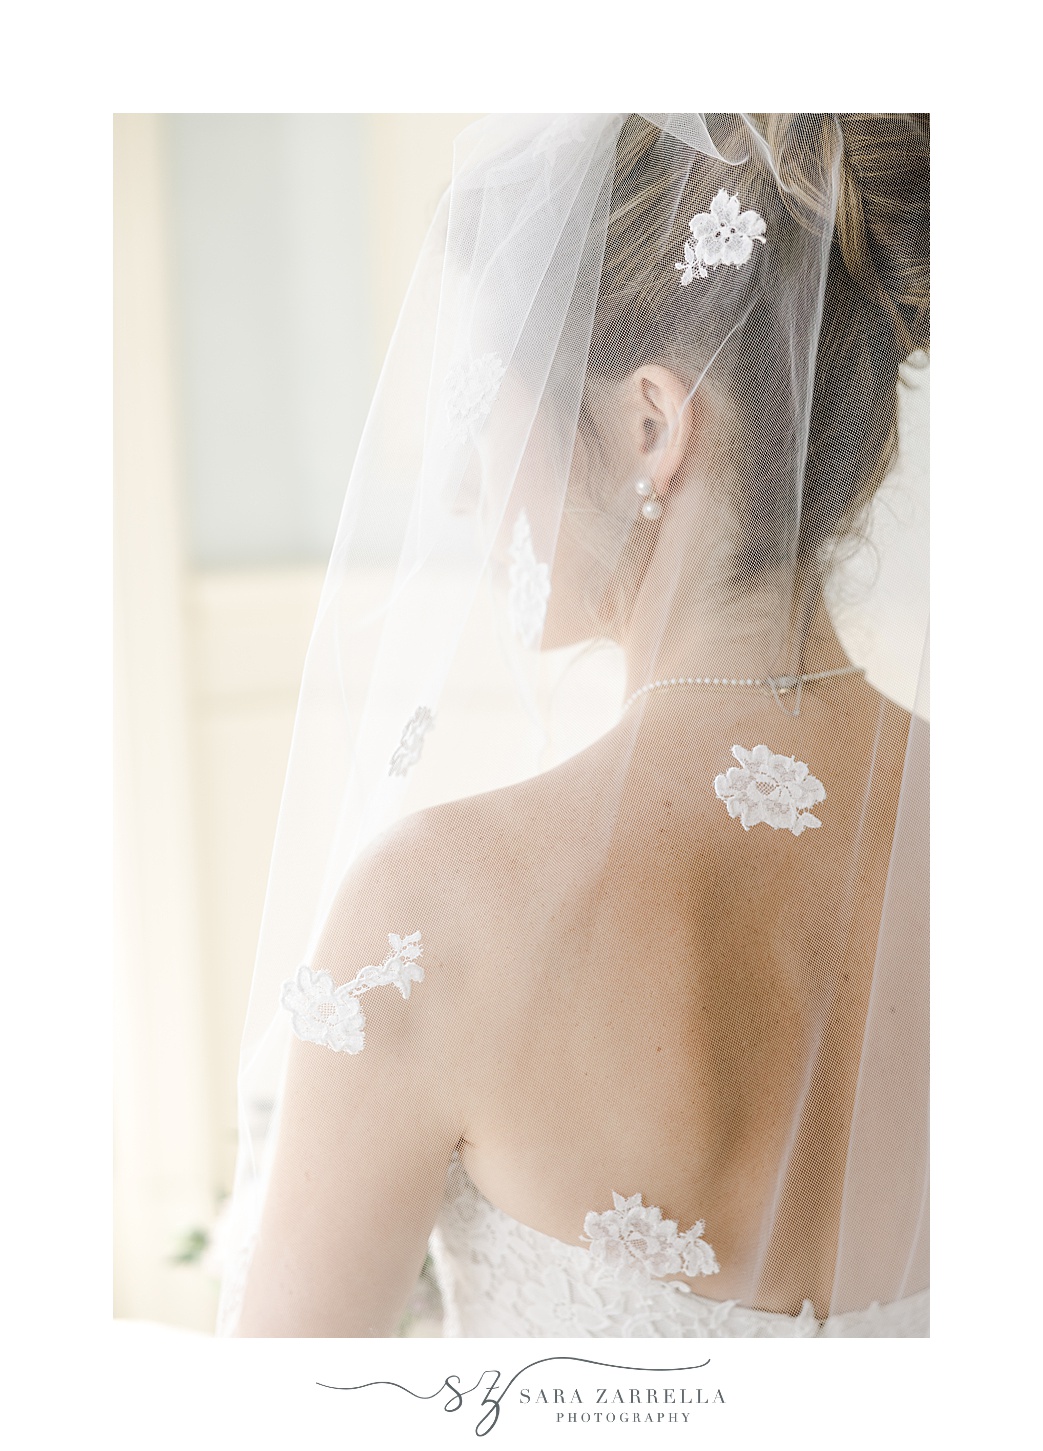 flower applique on bride's veil inside the bridal suite at the Chanler